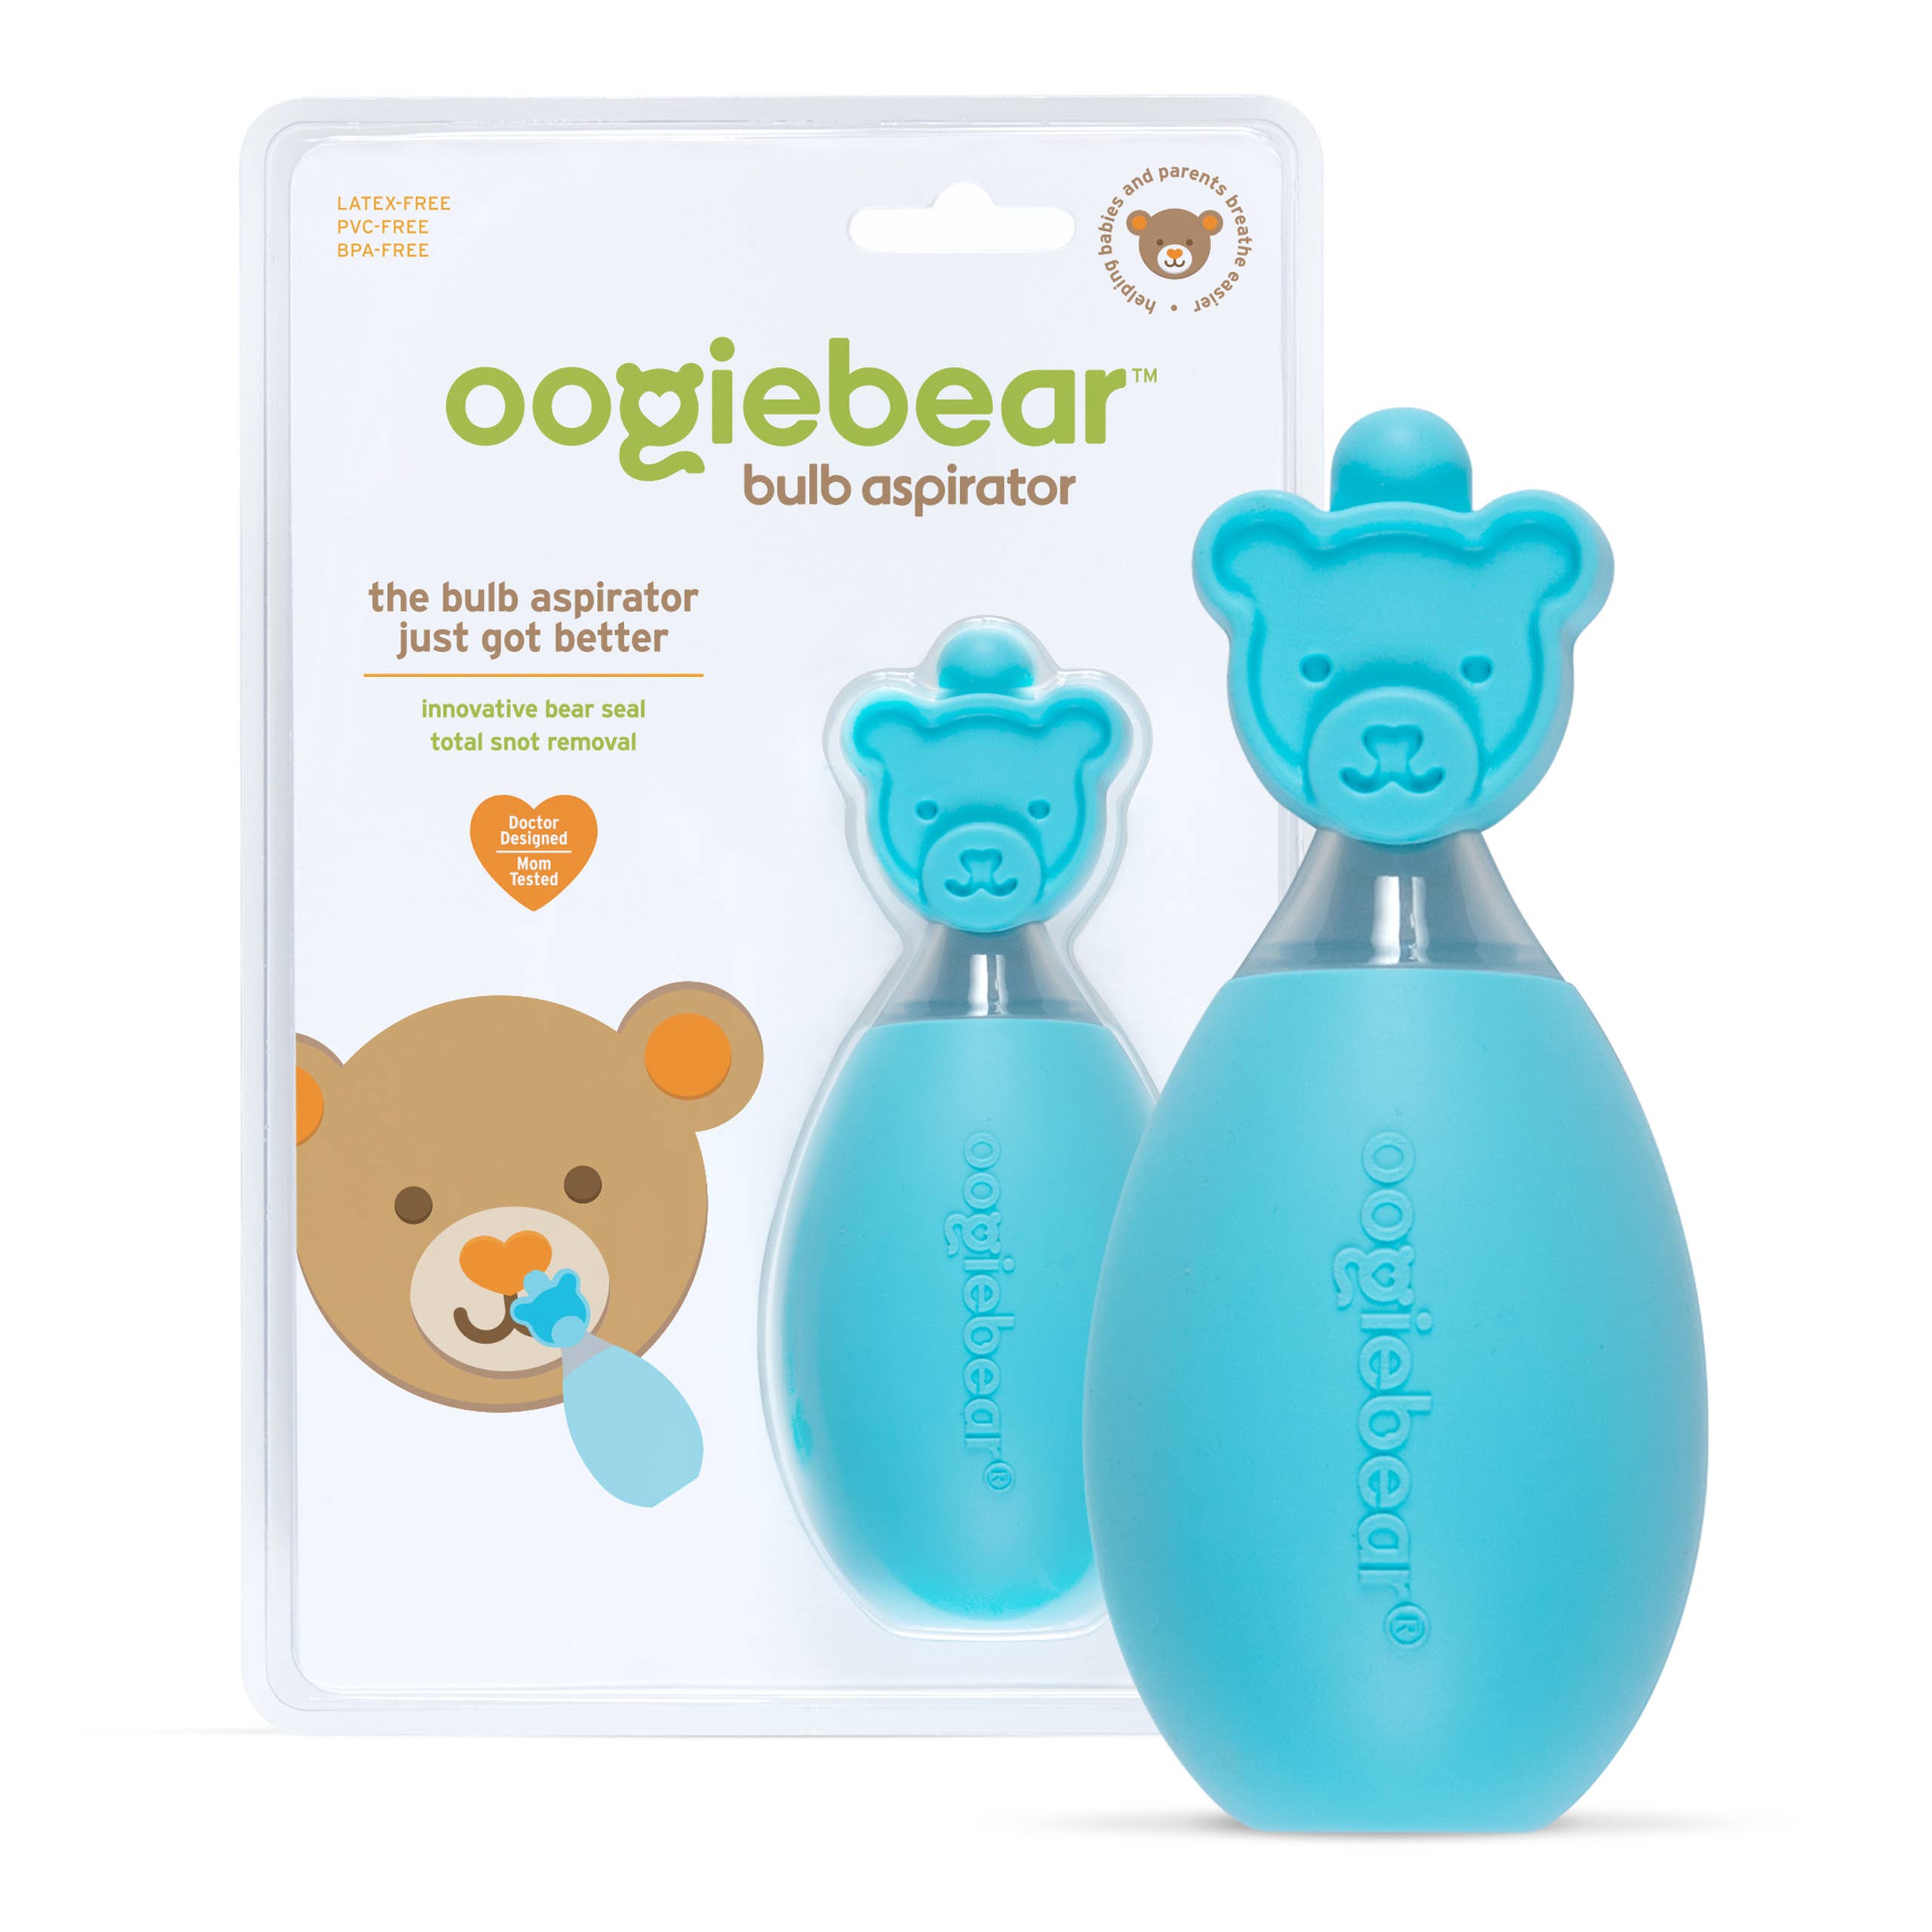 Oogiebear New Parent Gift Set in Rainbow